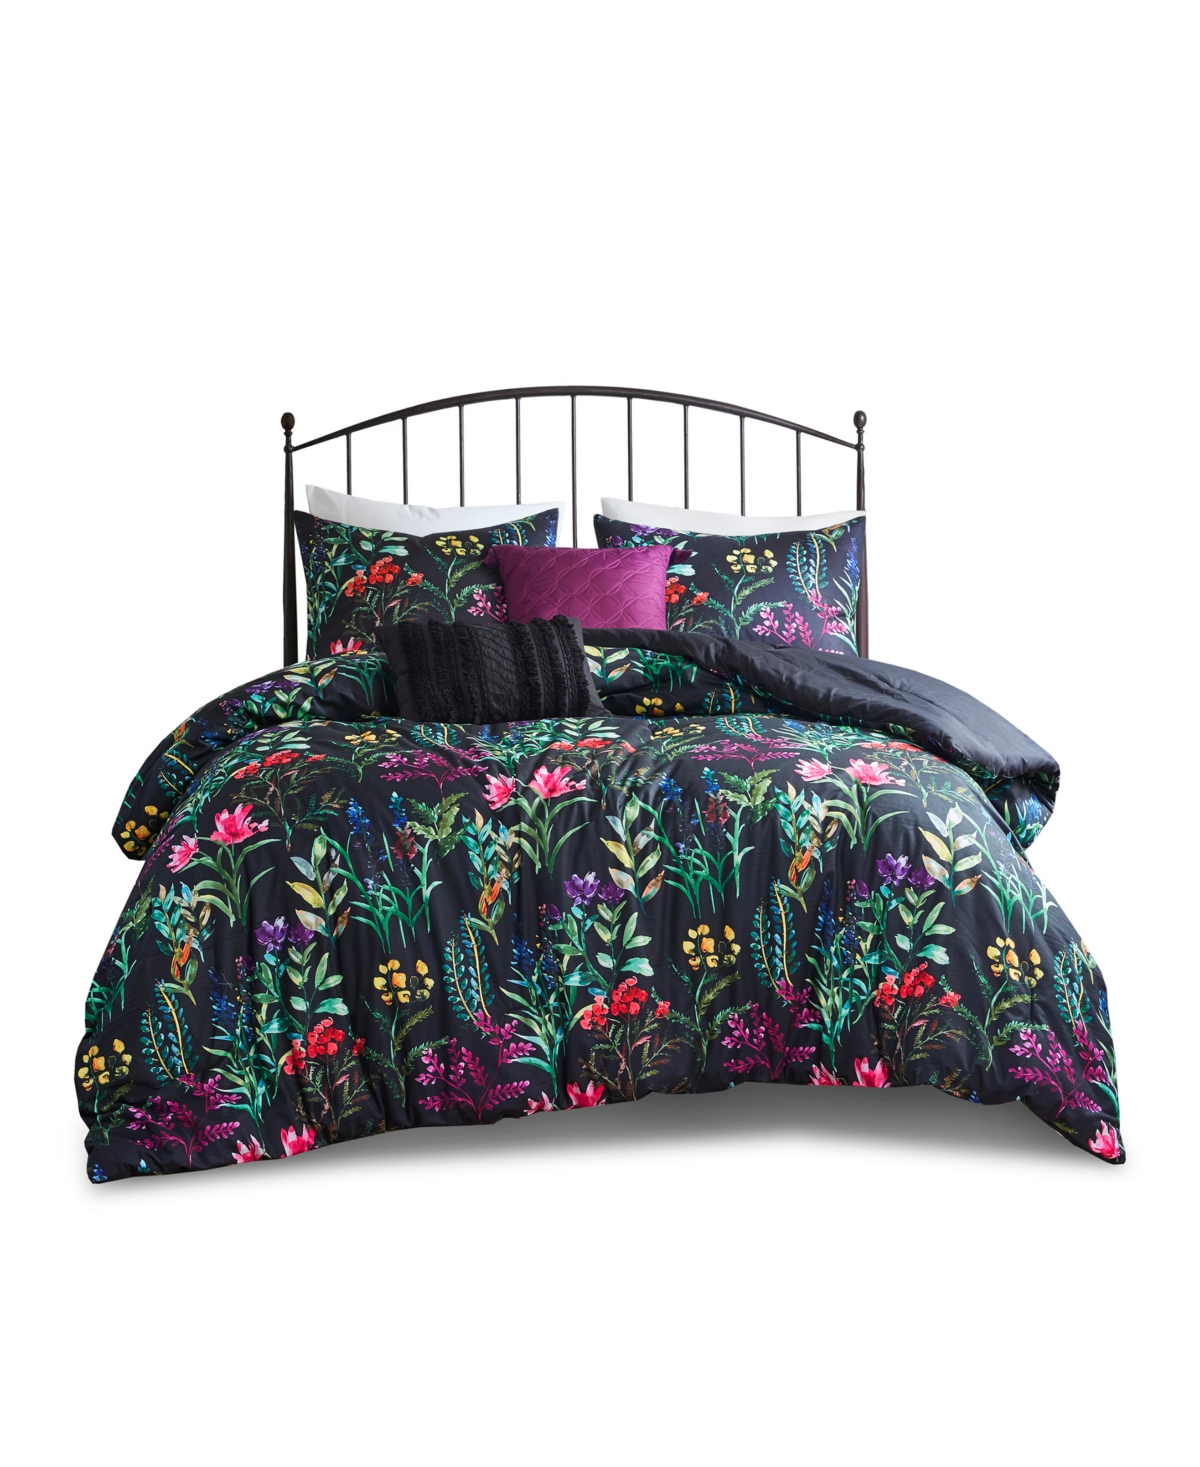 Madison Park Tasha Floral 5-pc. Comforter Set, Full/queen In Black